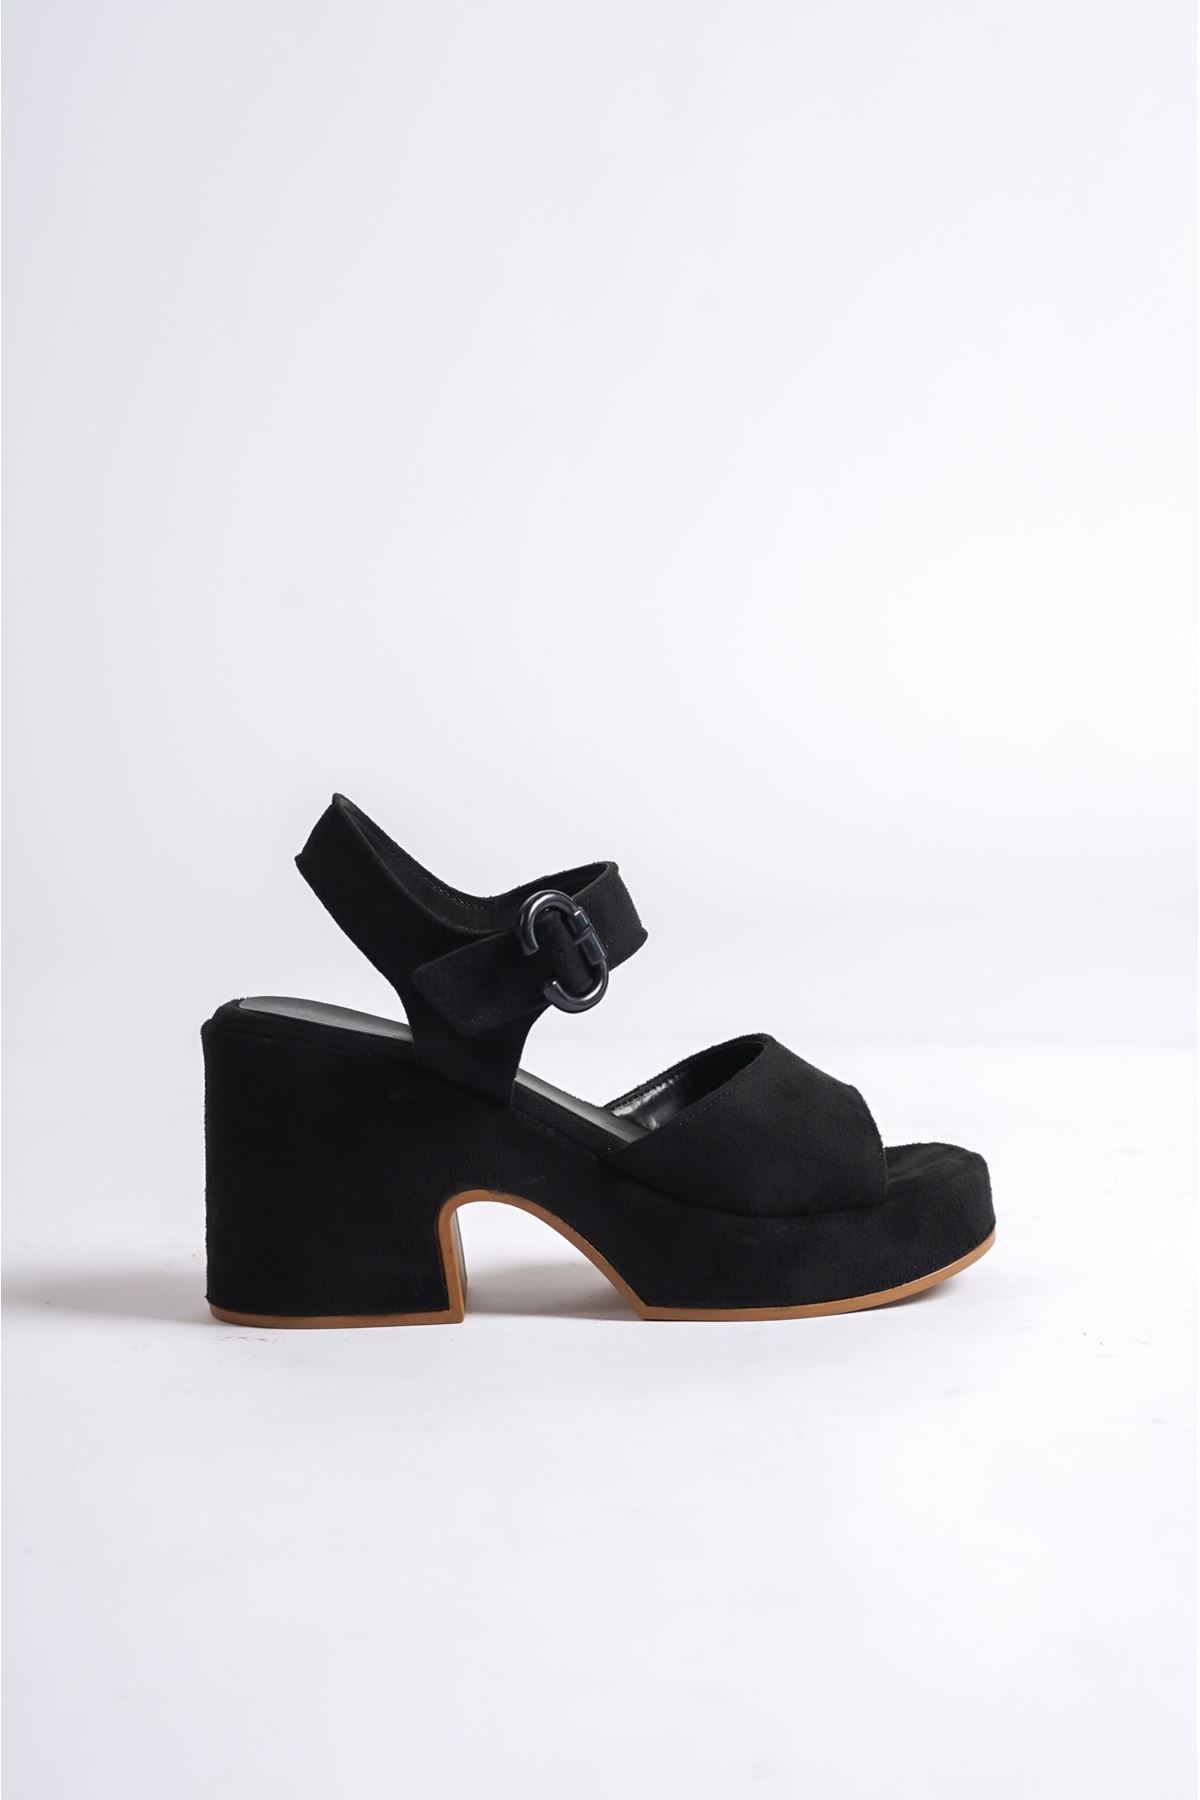 Darcy Siyah Süet Platform Topuklu Kadın Ayakkabı